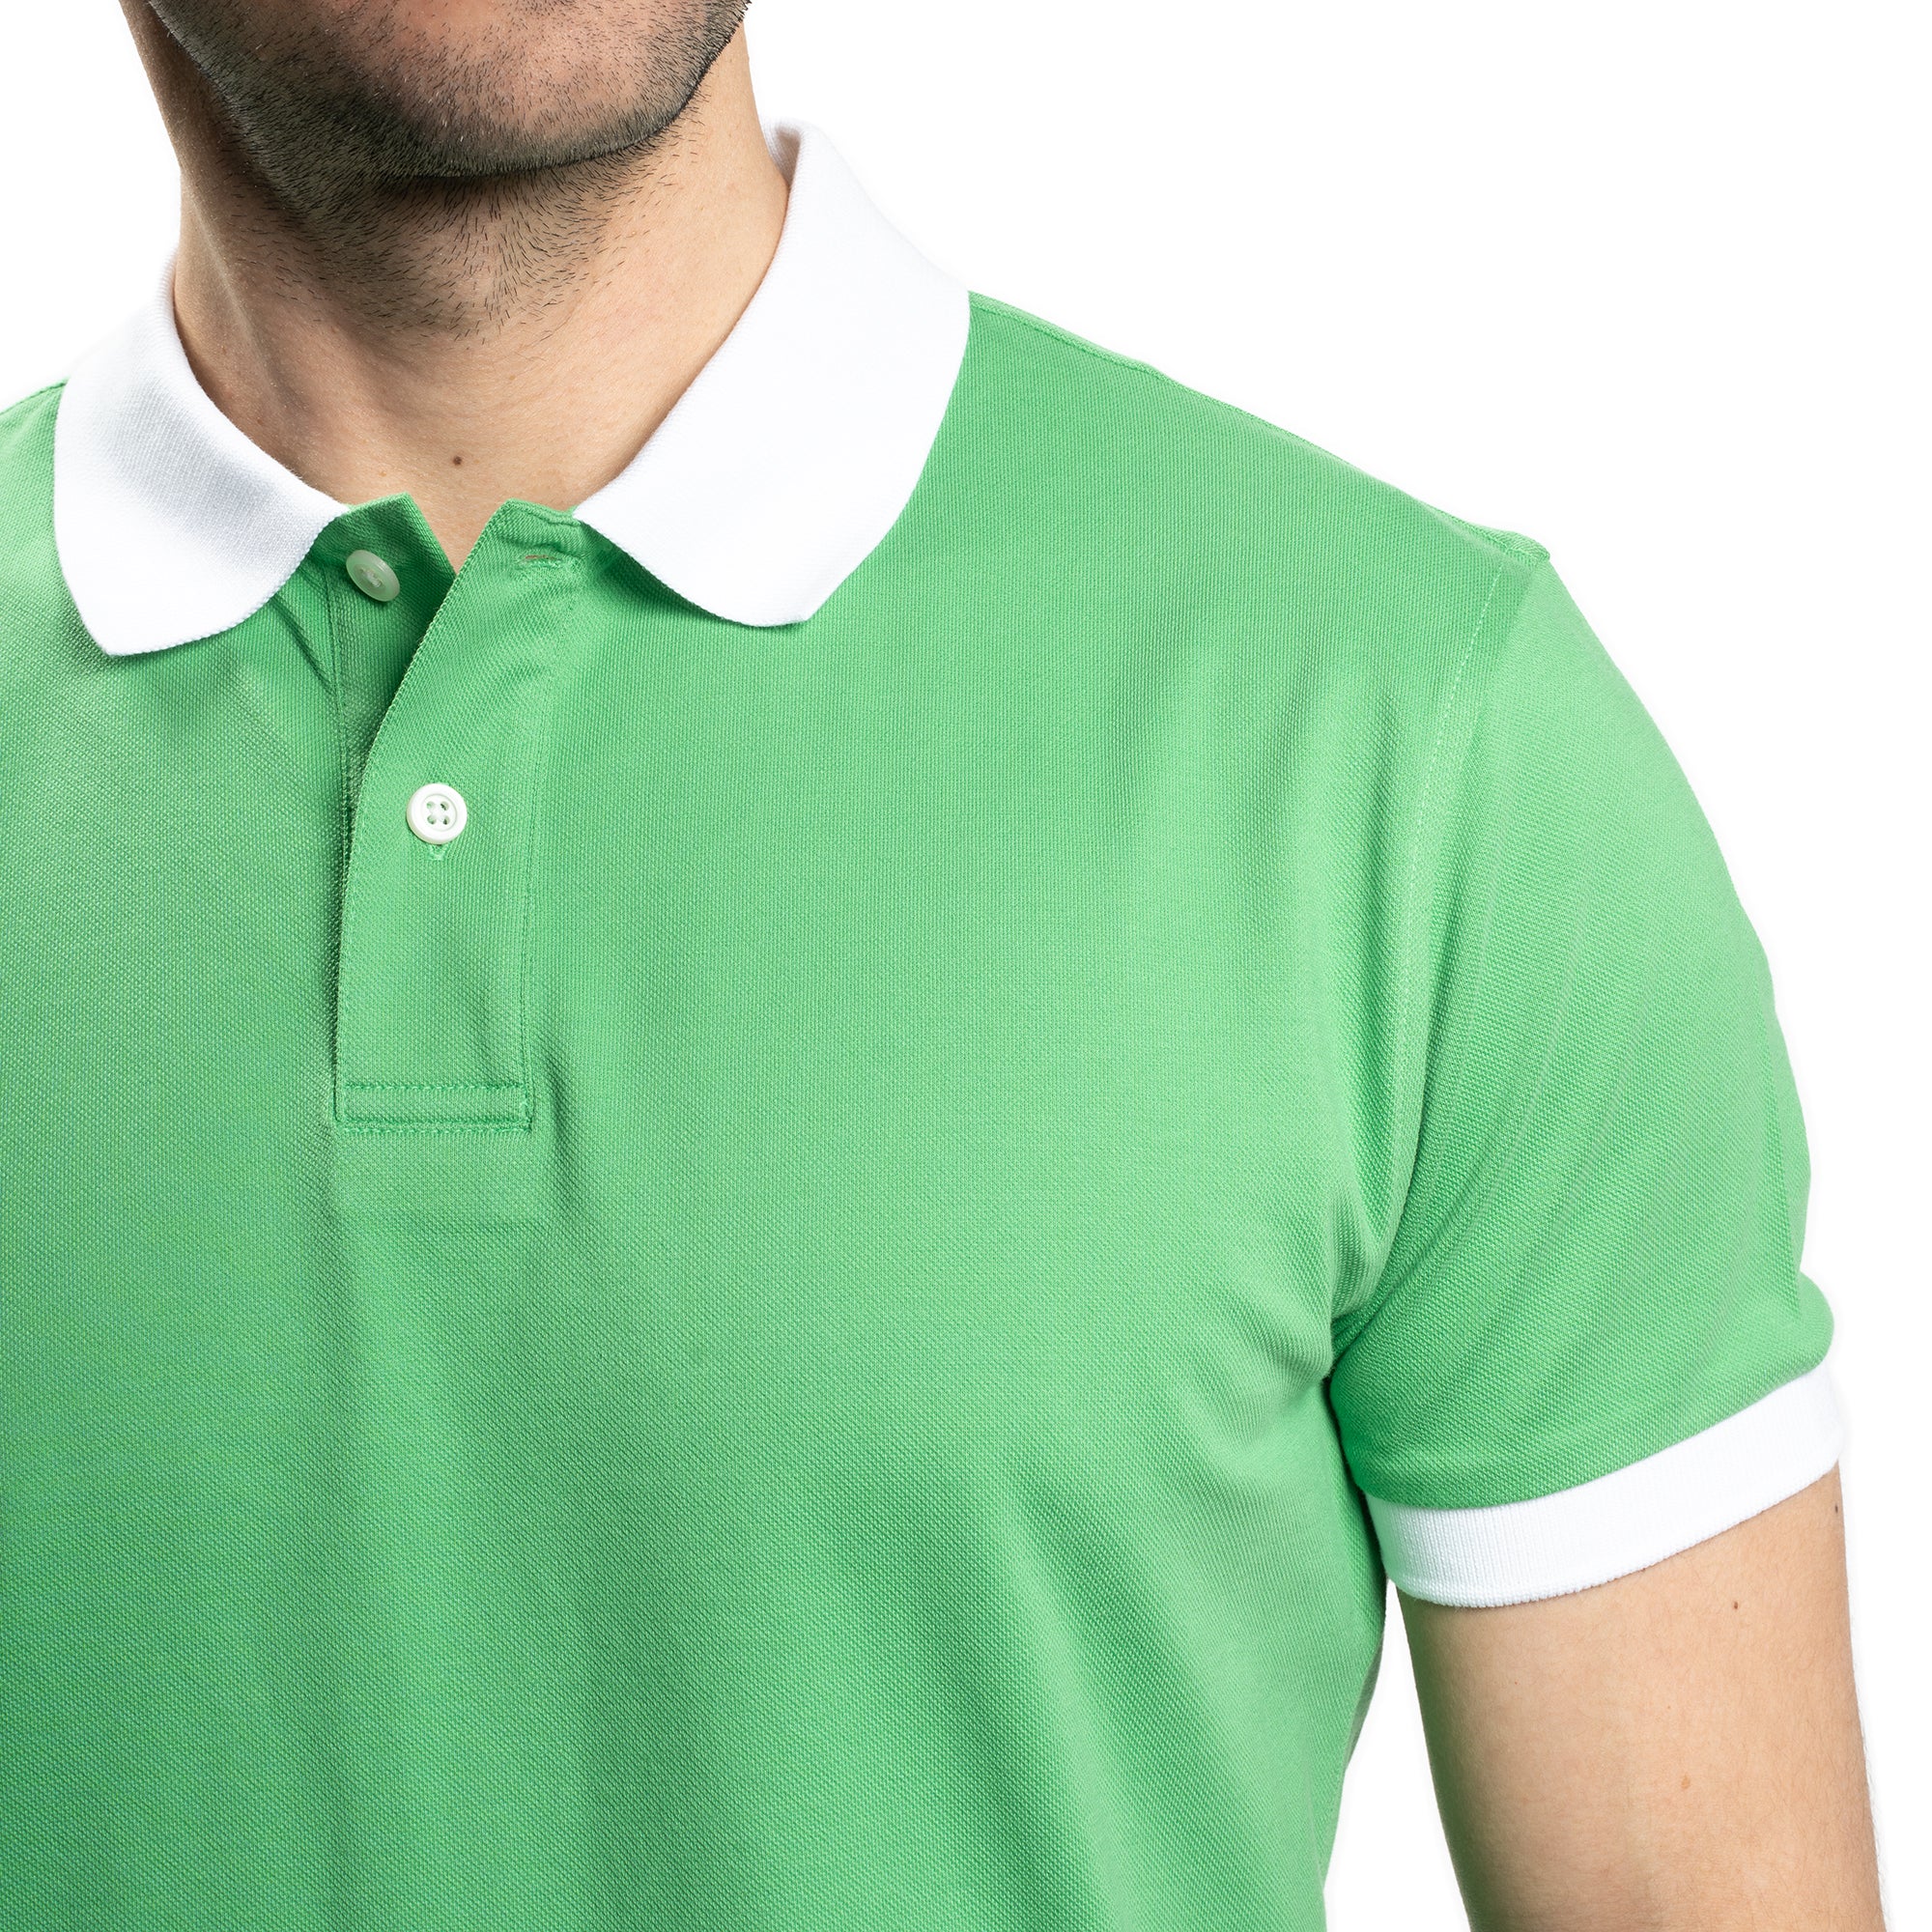 James Polo Shirt - Green Tipped